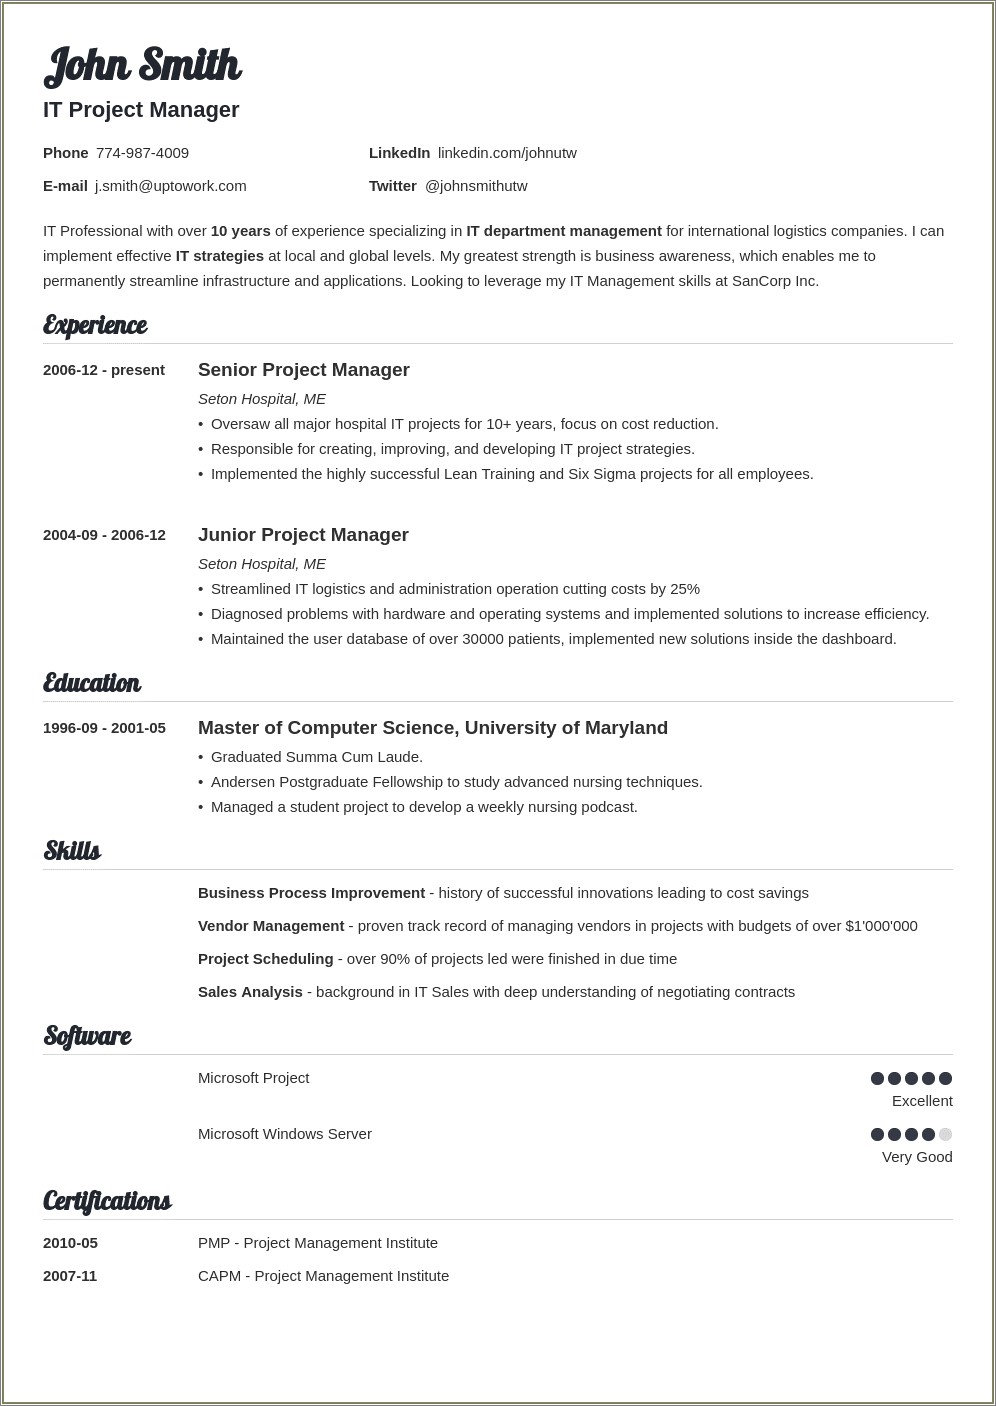 Resume Format In Ms Word 2007